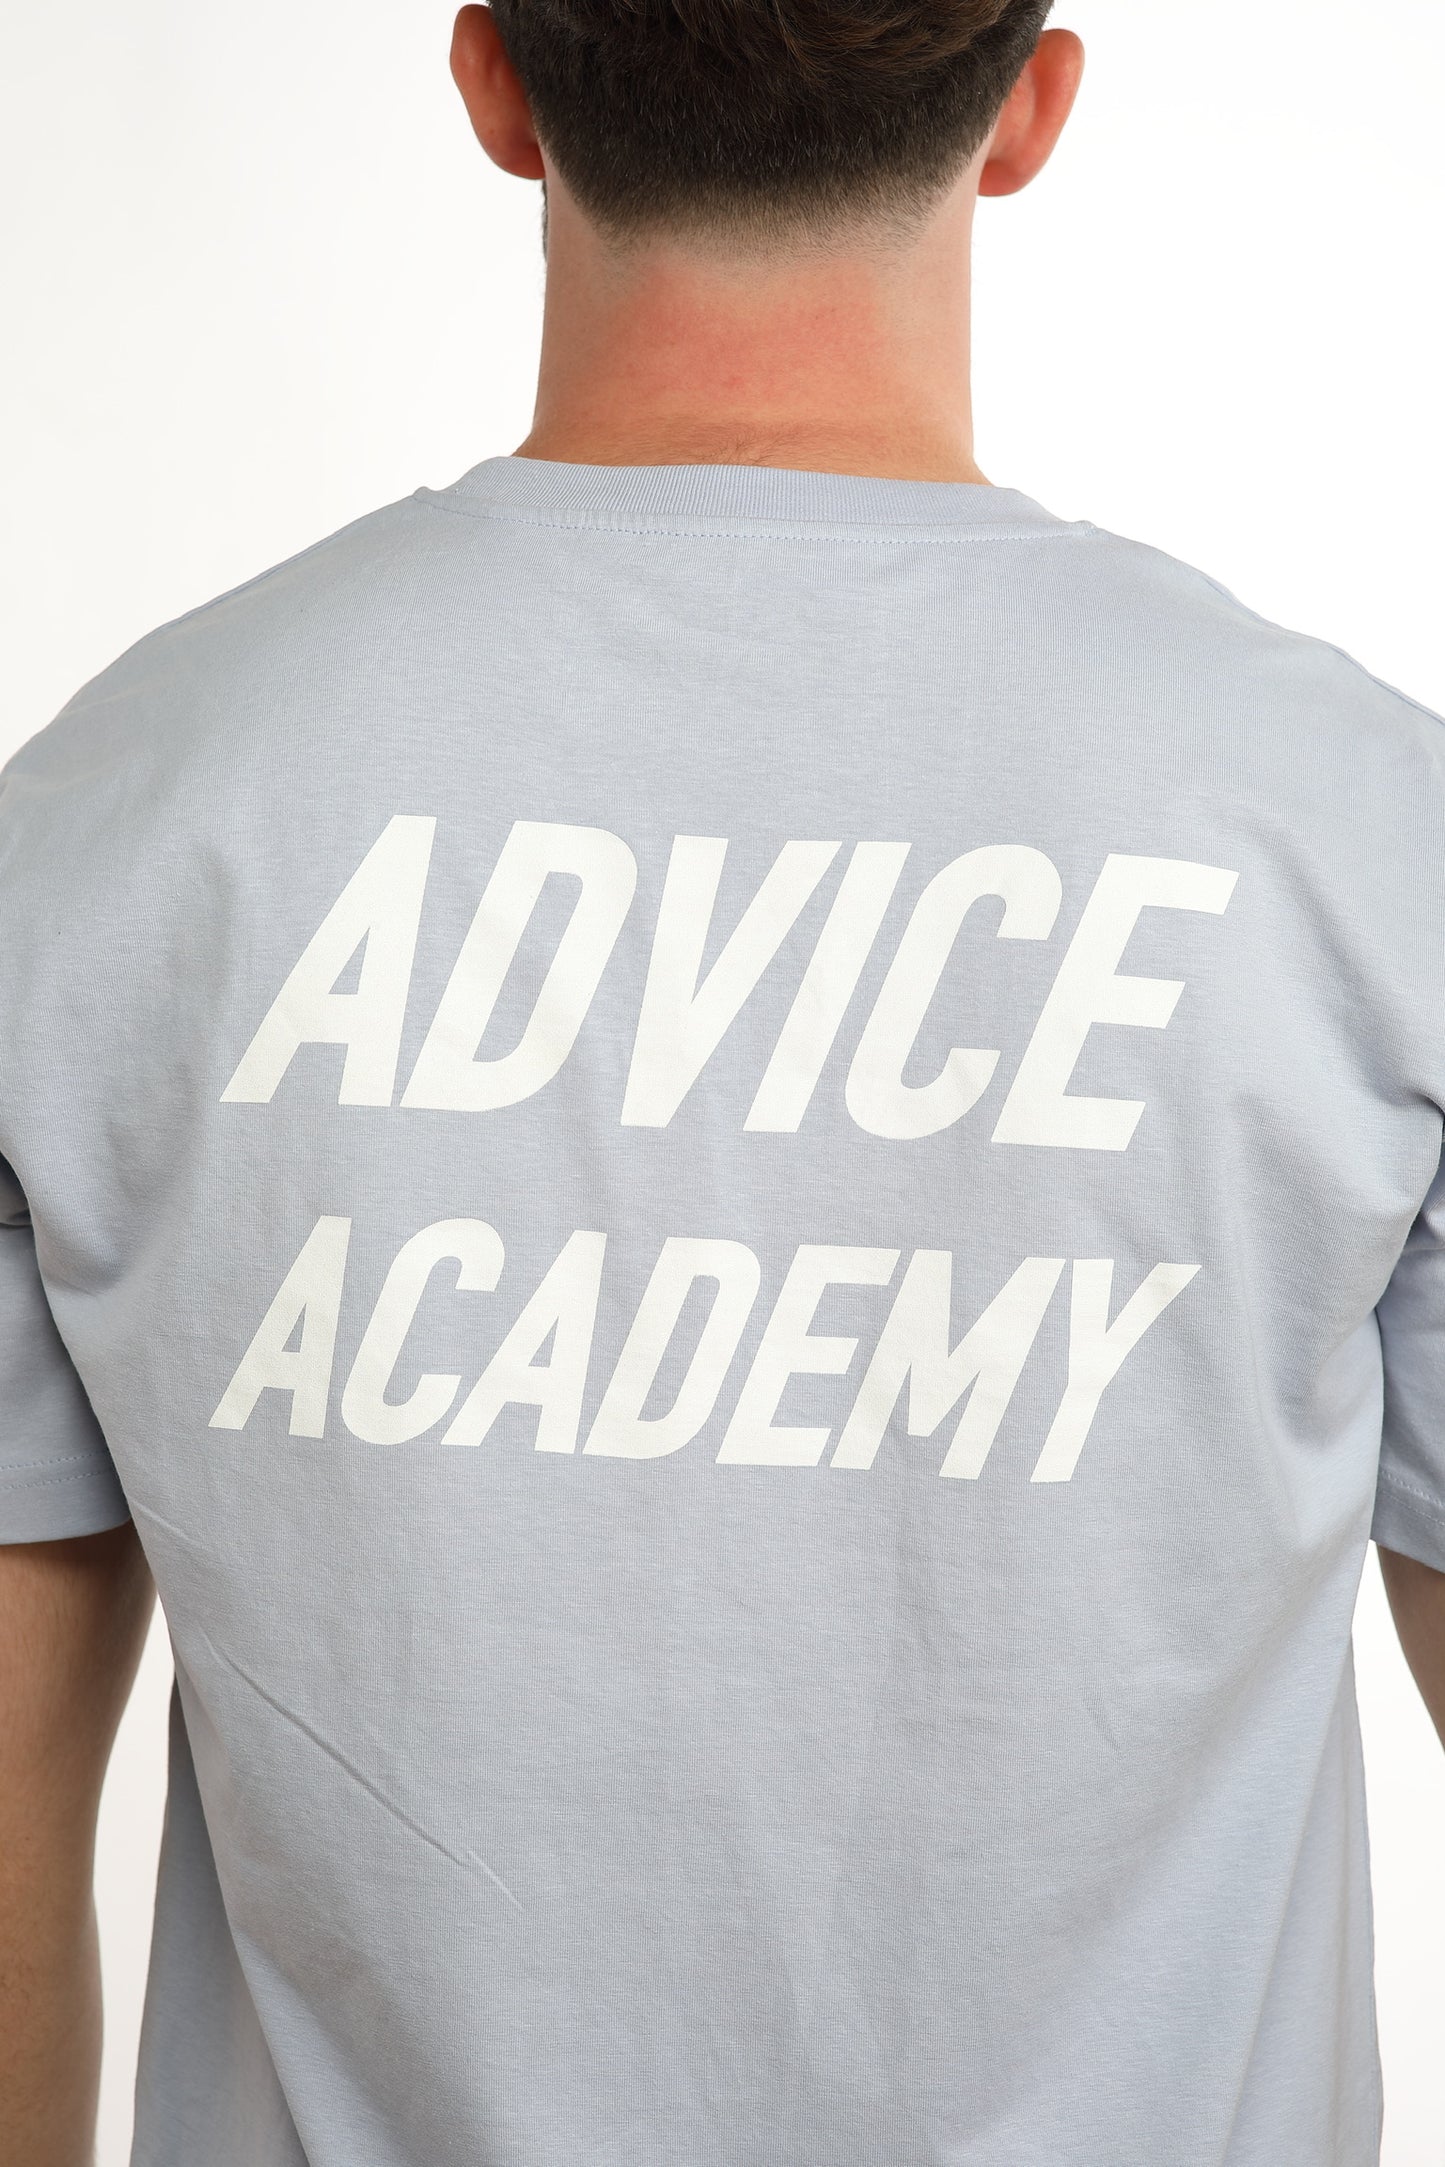 Advice Academy Premium Oversized Tee - Serene Blue